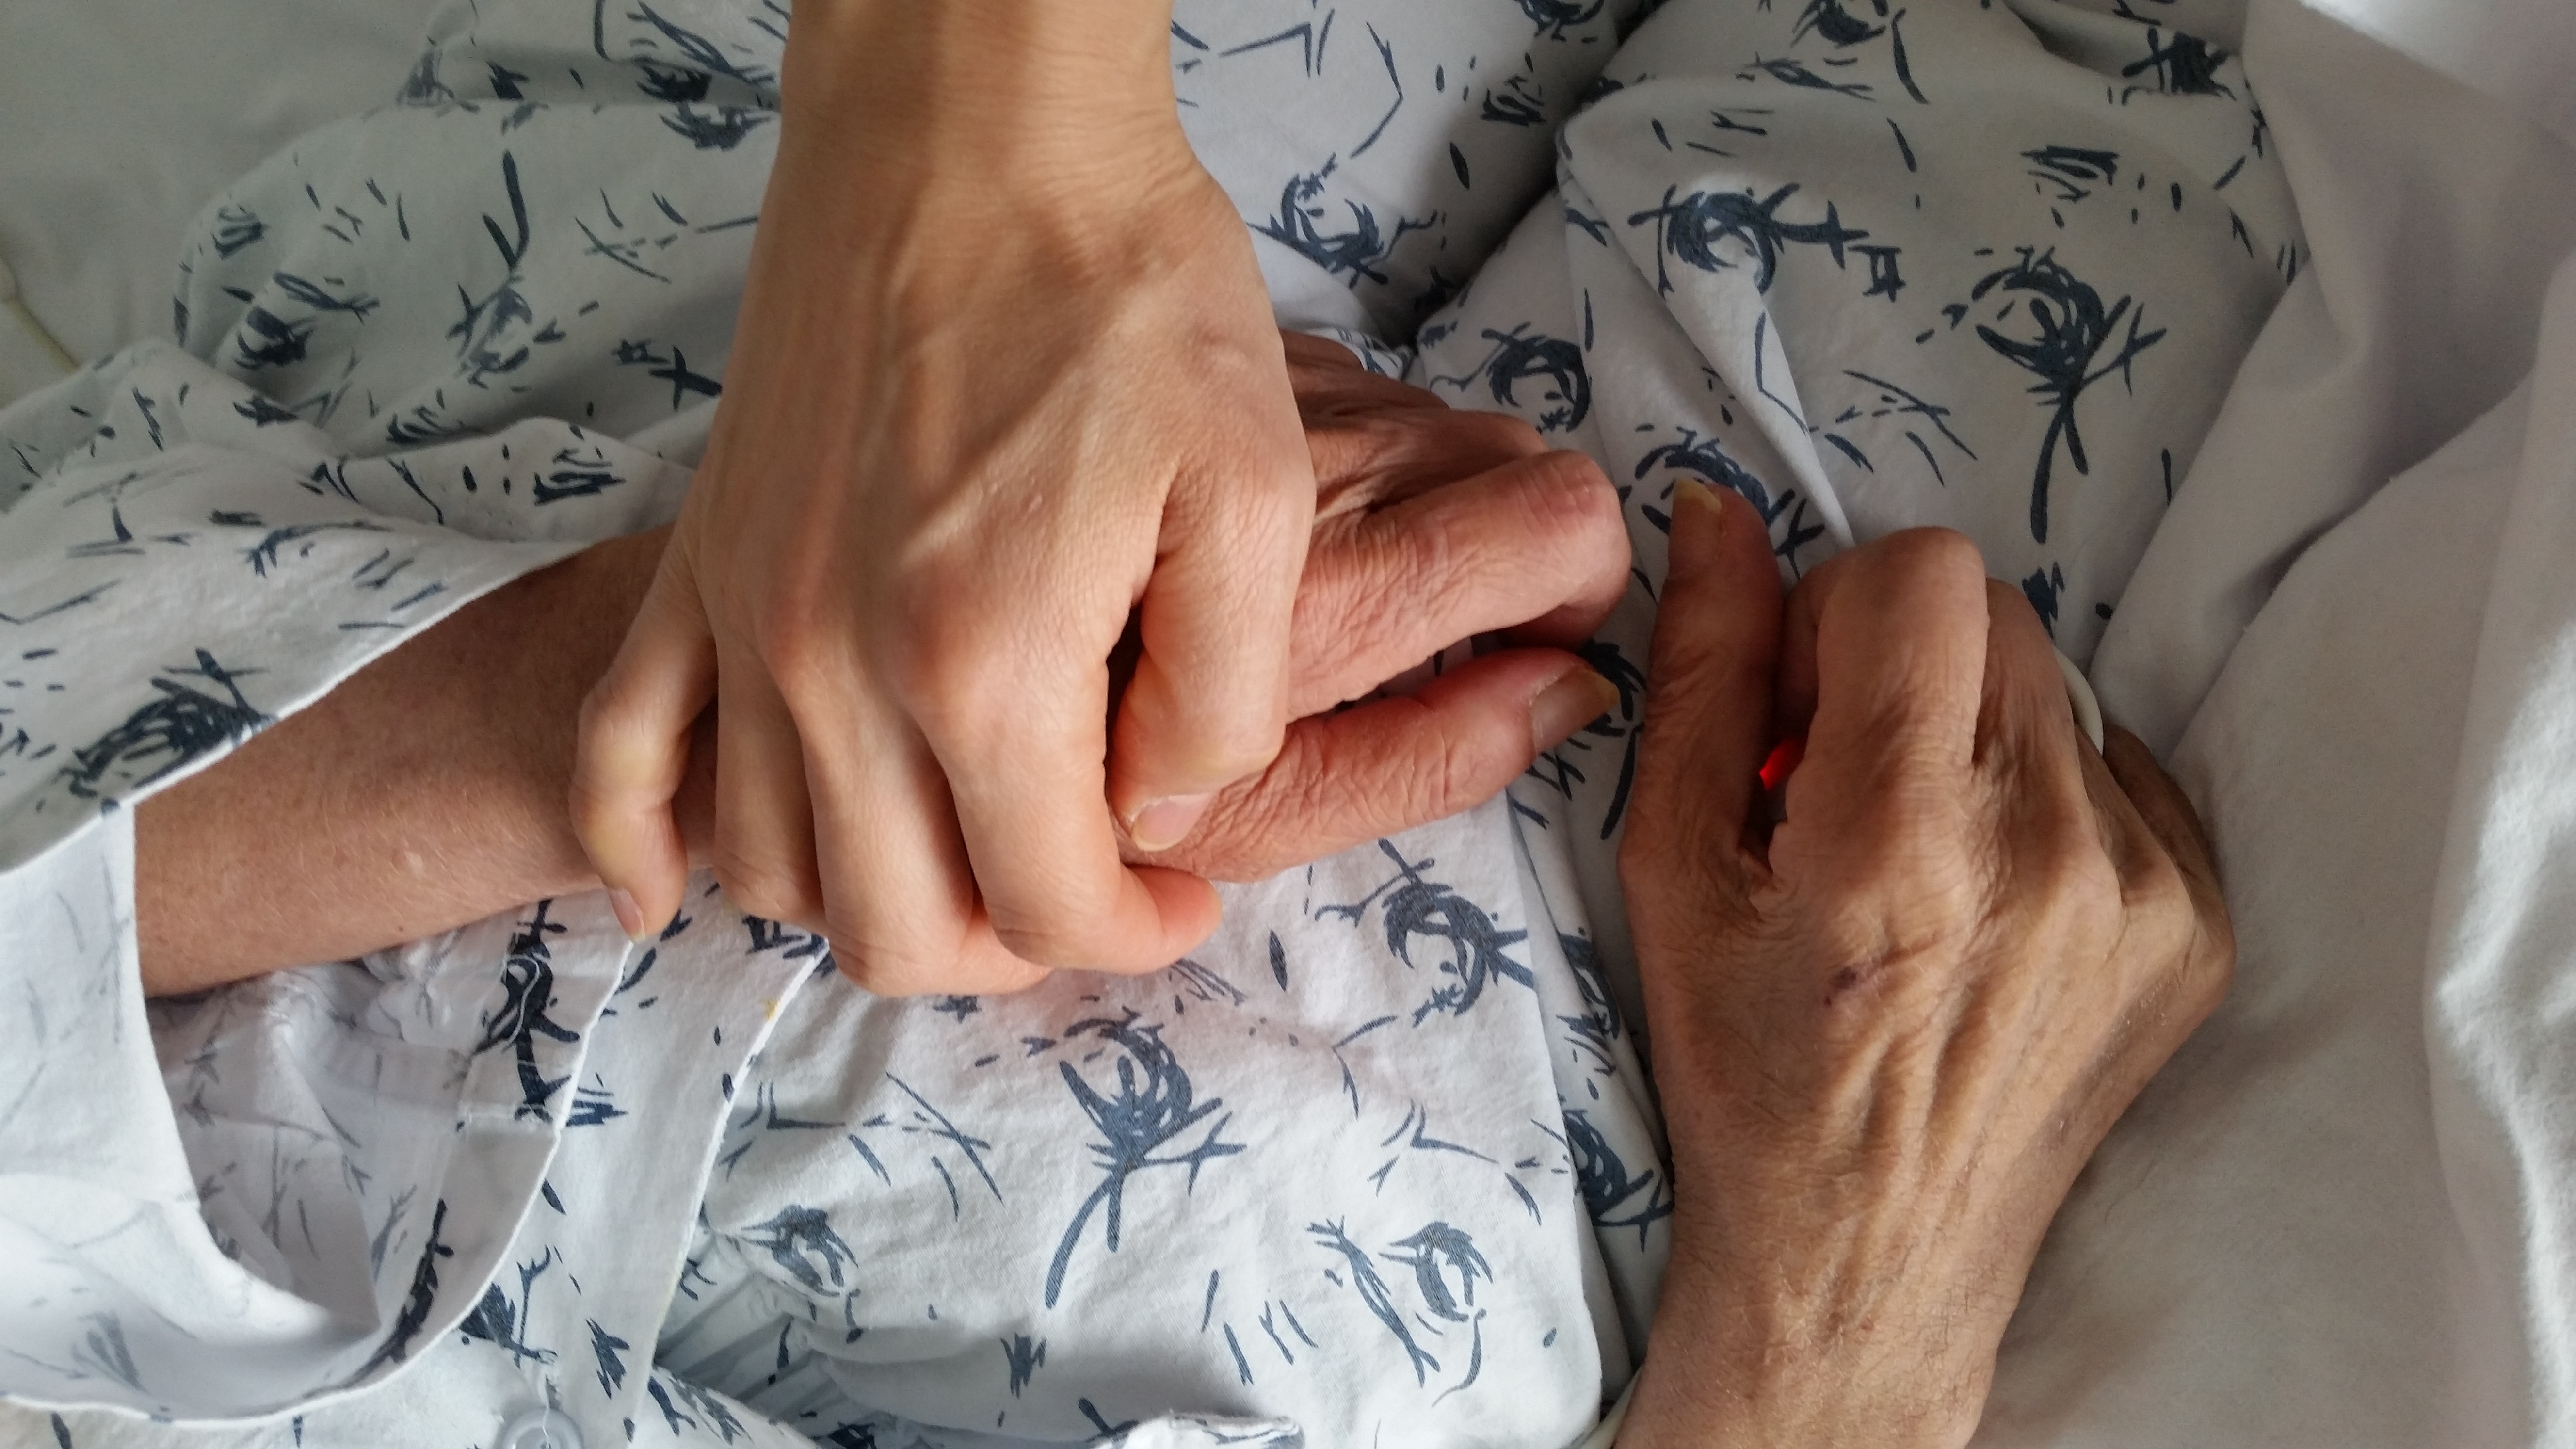 holding elderly family member's hand in hospital during end-of-life care